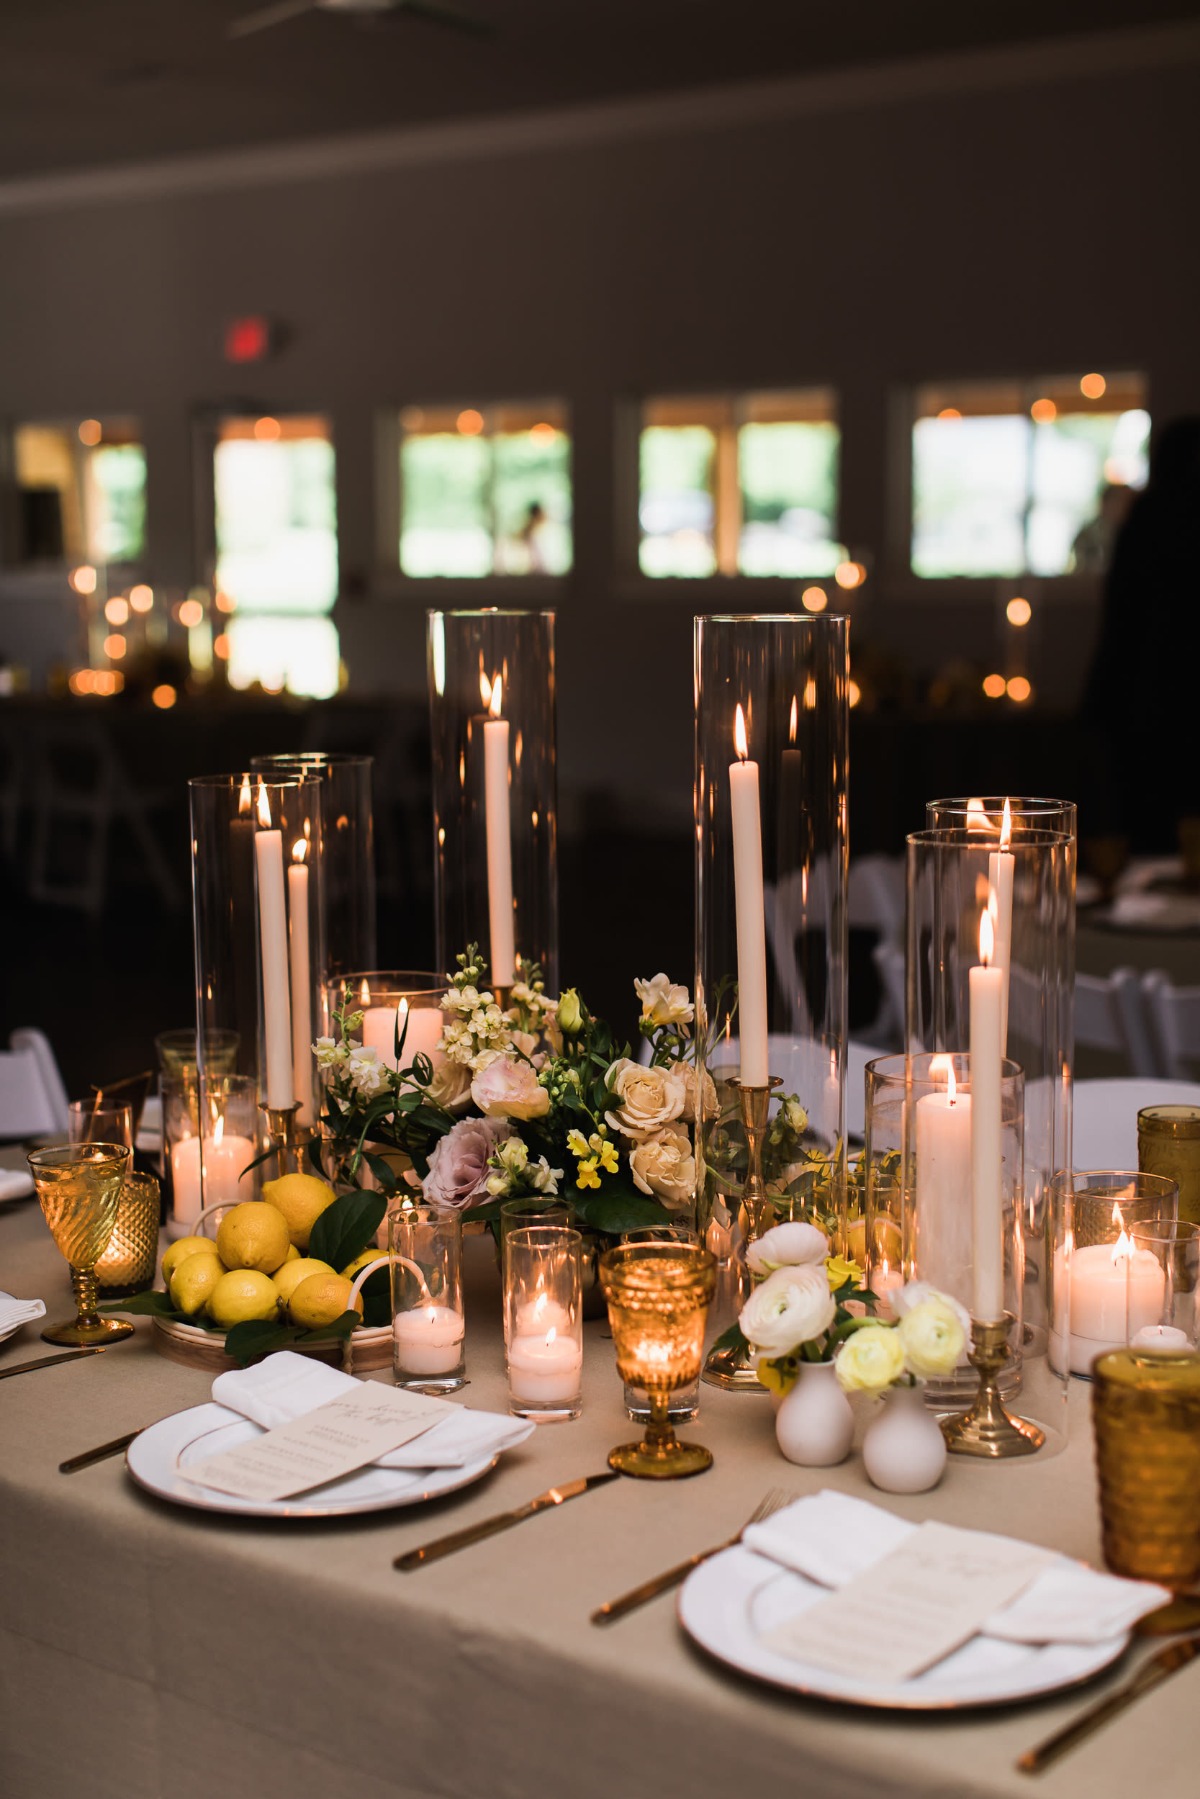 Italian garden party wedding decor with light candles